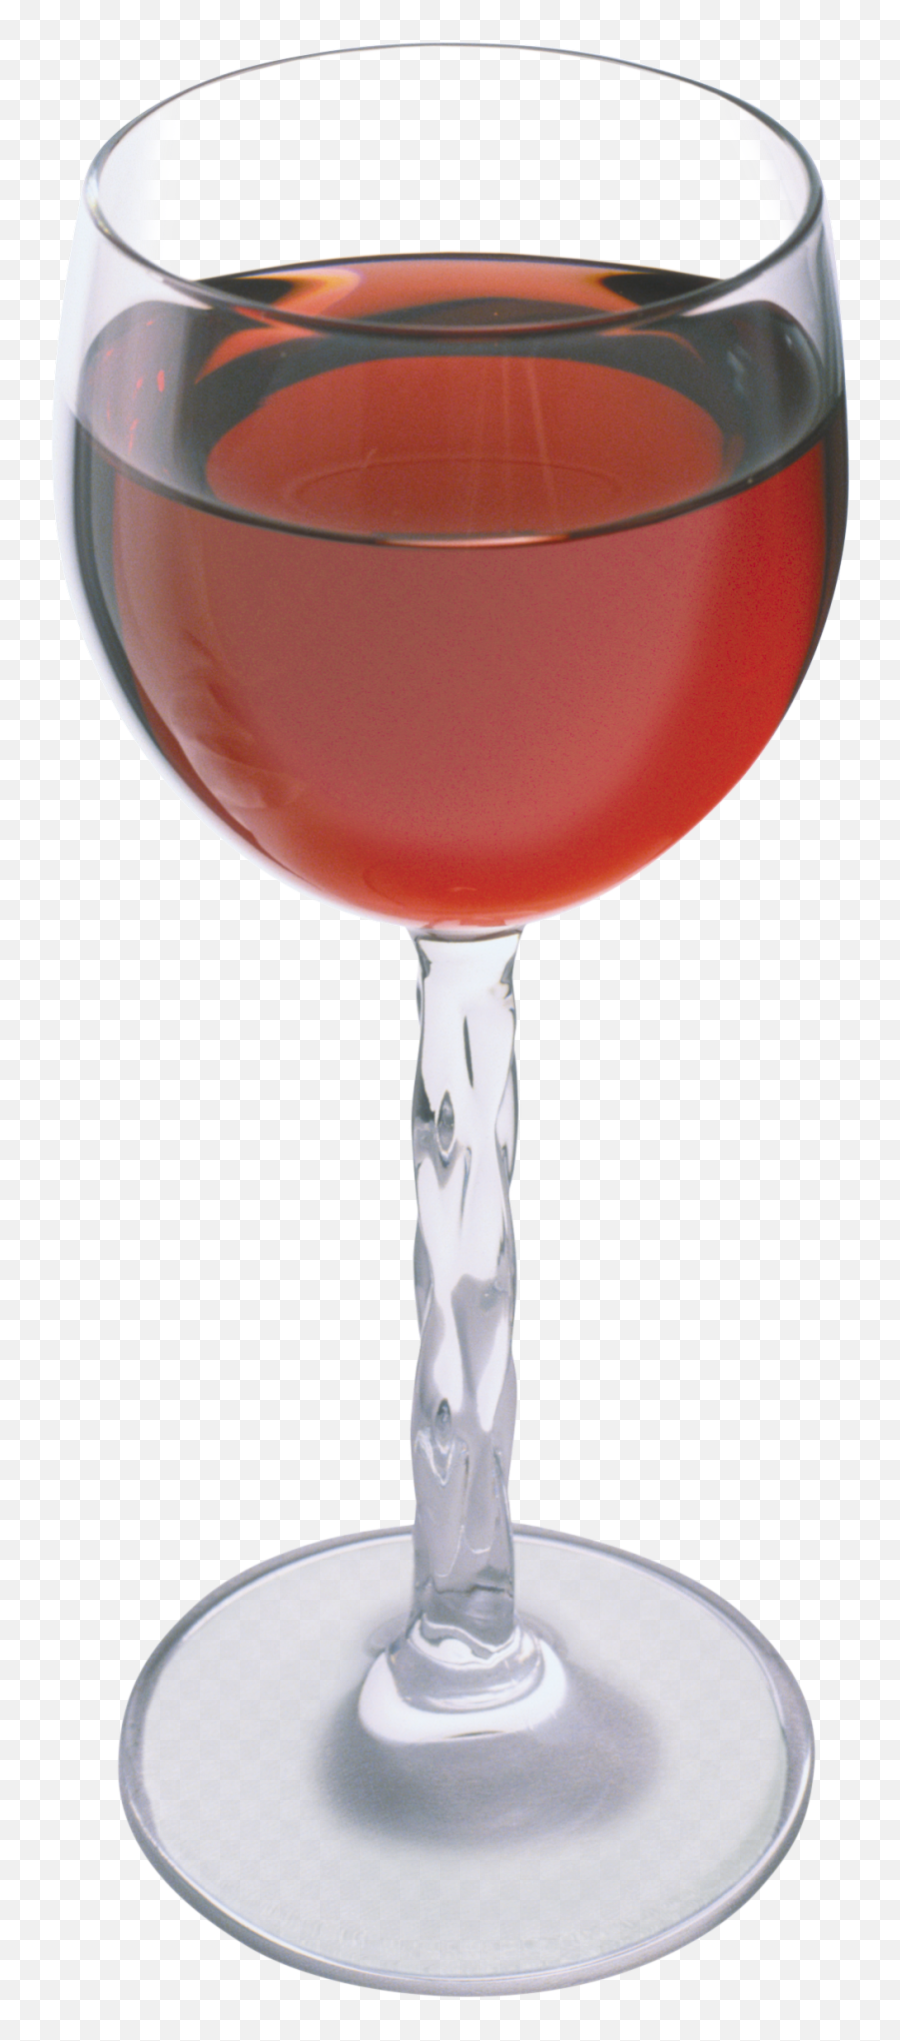 Wine Glass Png Image - Purepng Free Transparent Cc0 Png Wine Glass,Wine Glass Transparent Background